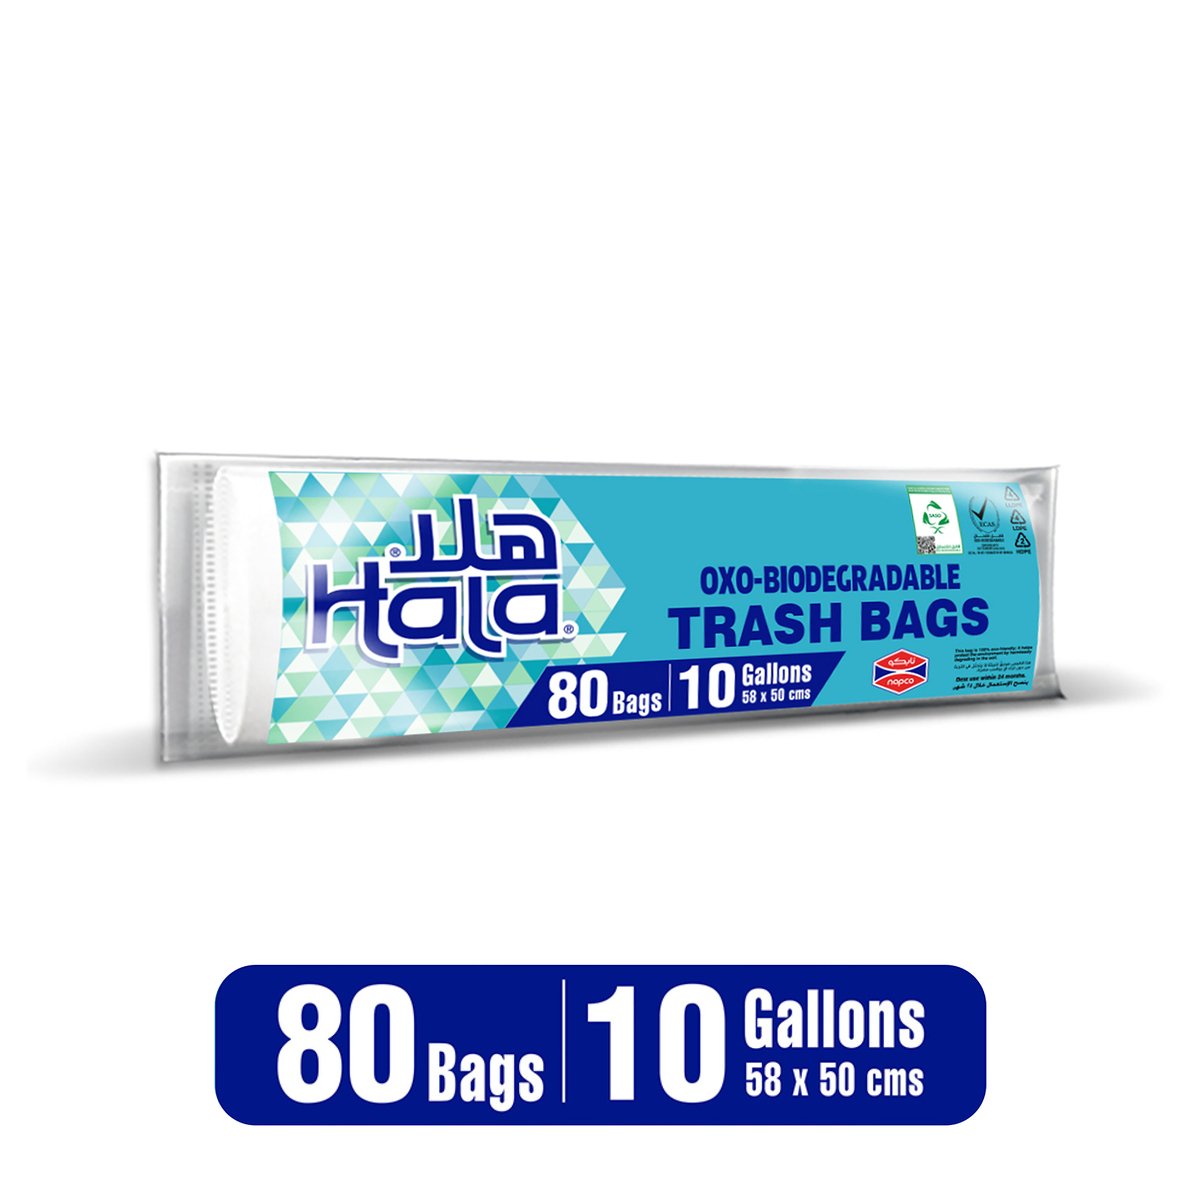 Hala Oxo Biodegradable Trash Bags 10 Gallons Size 58 x 50cms 80pcs